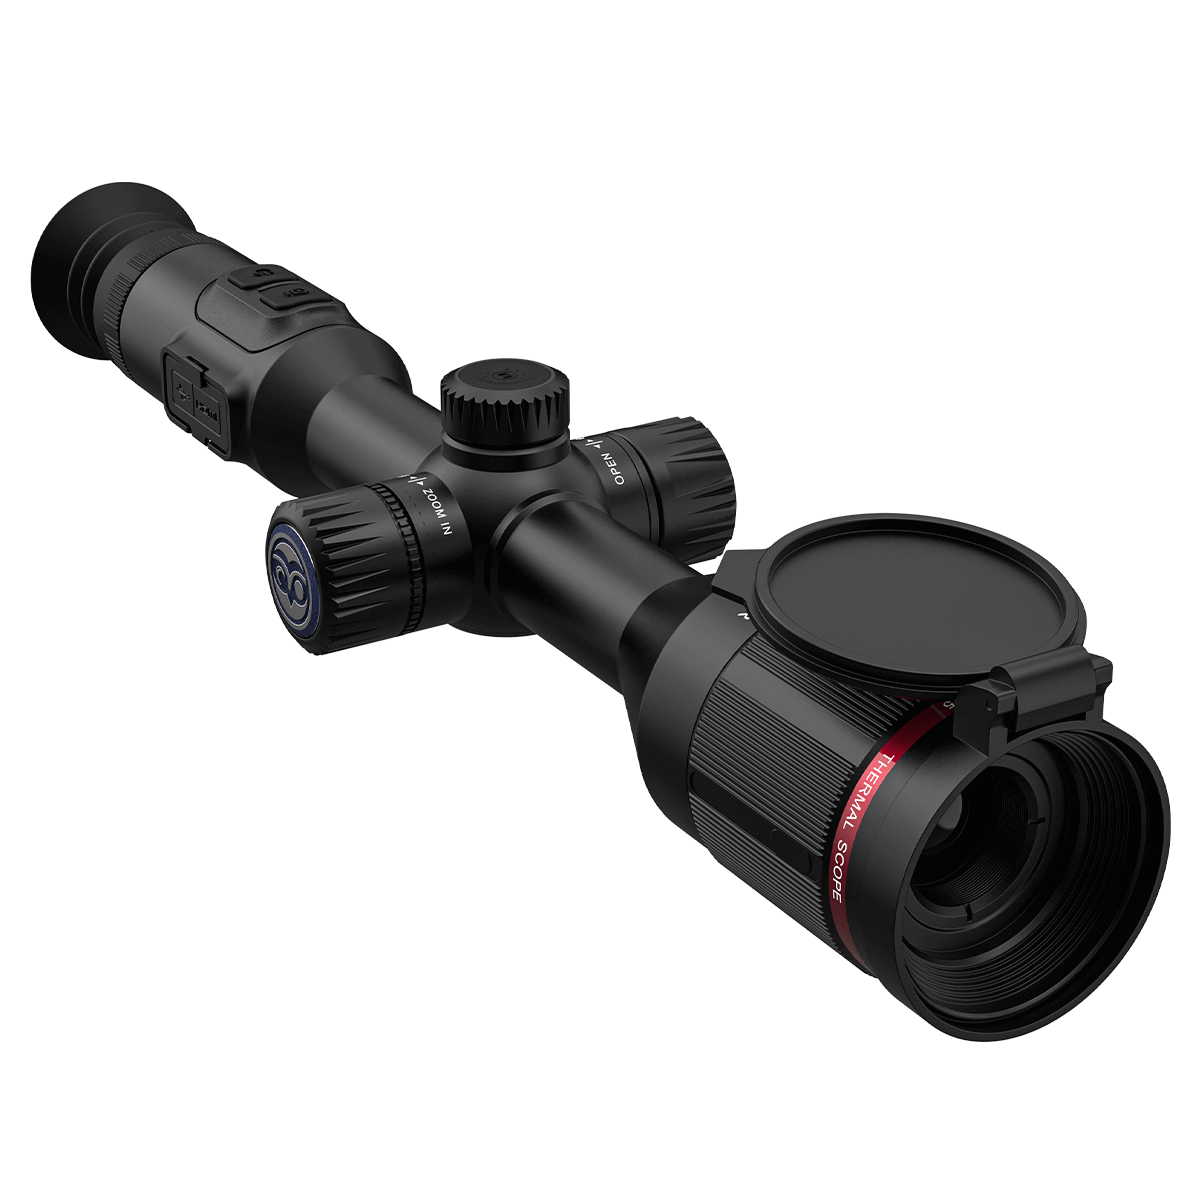 Owlset RSM20 1.6-6.4x25 Thermal Riflescope